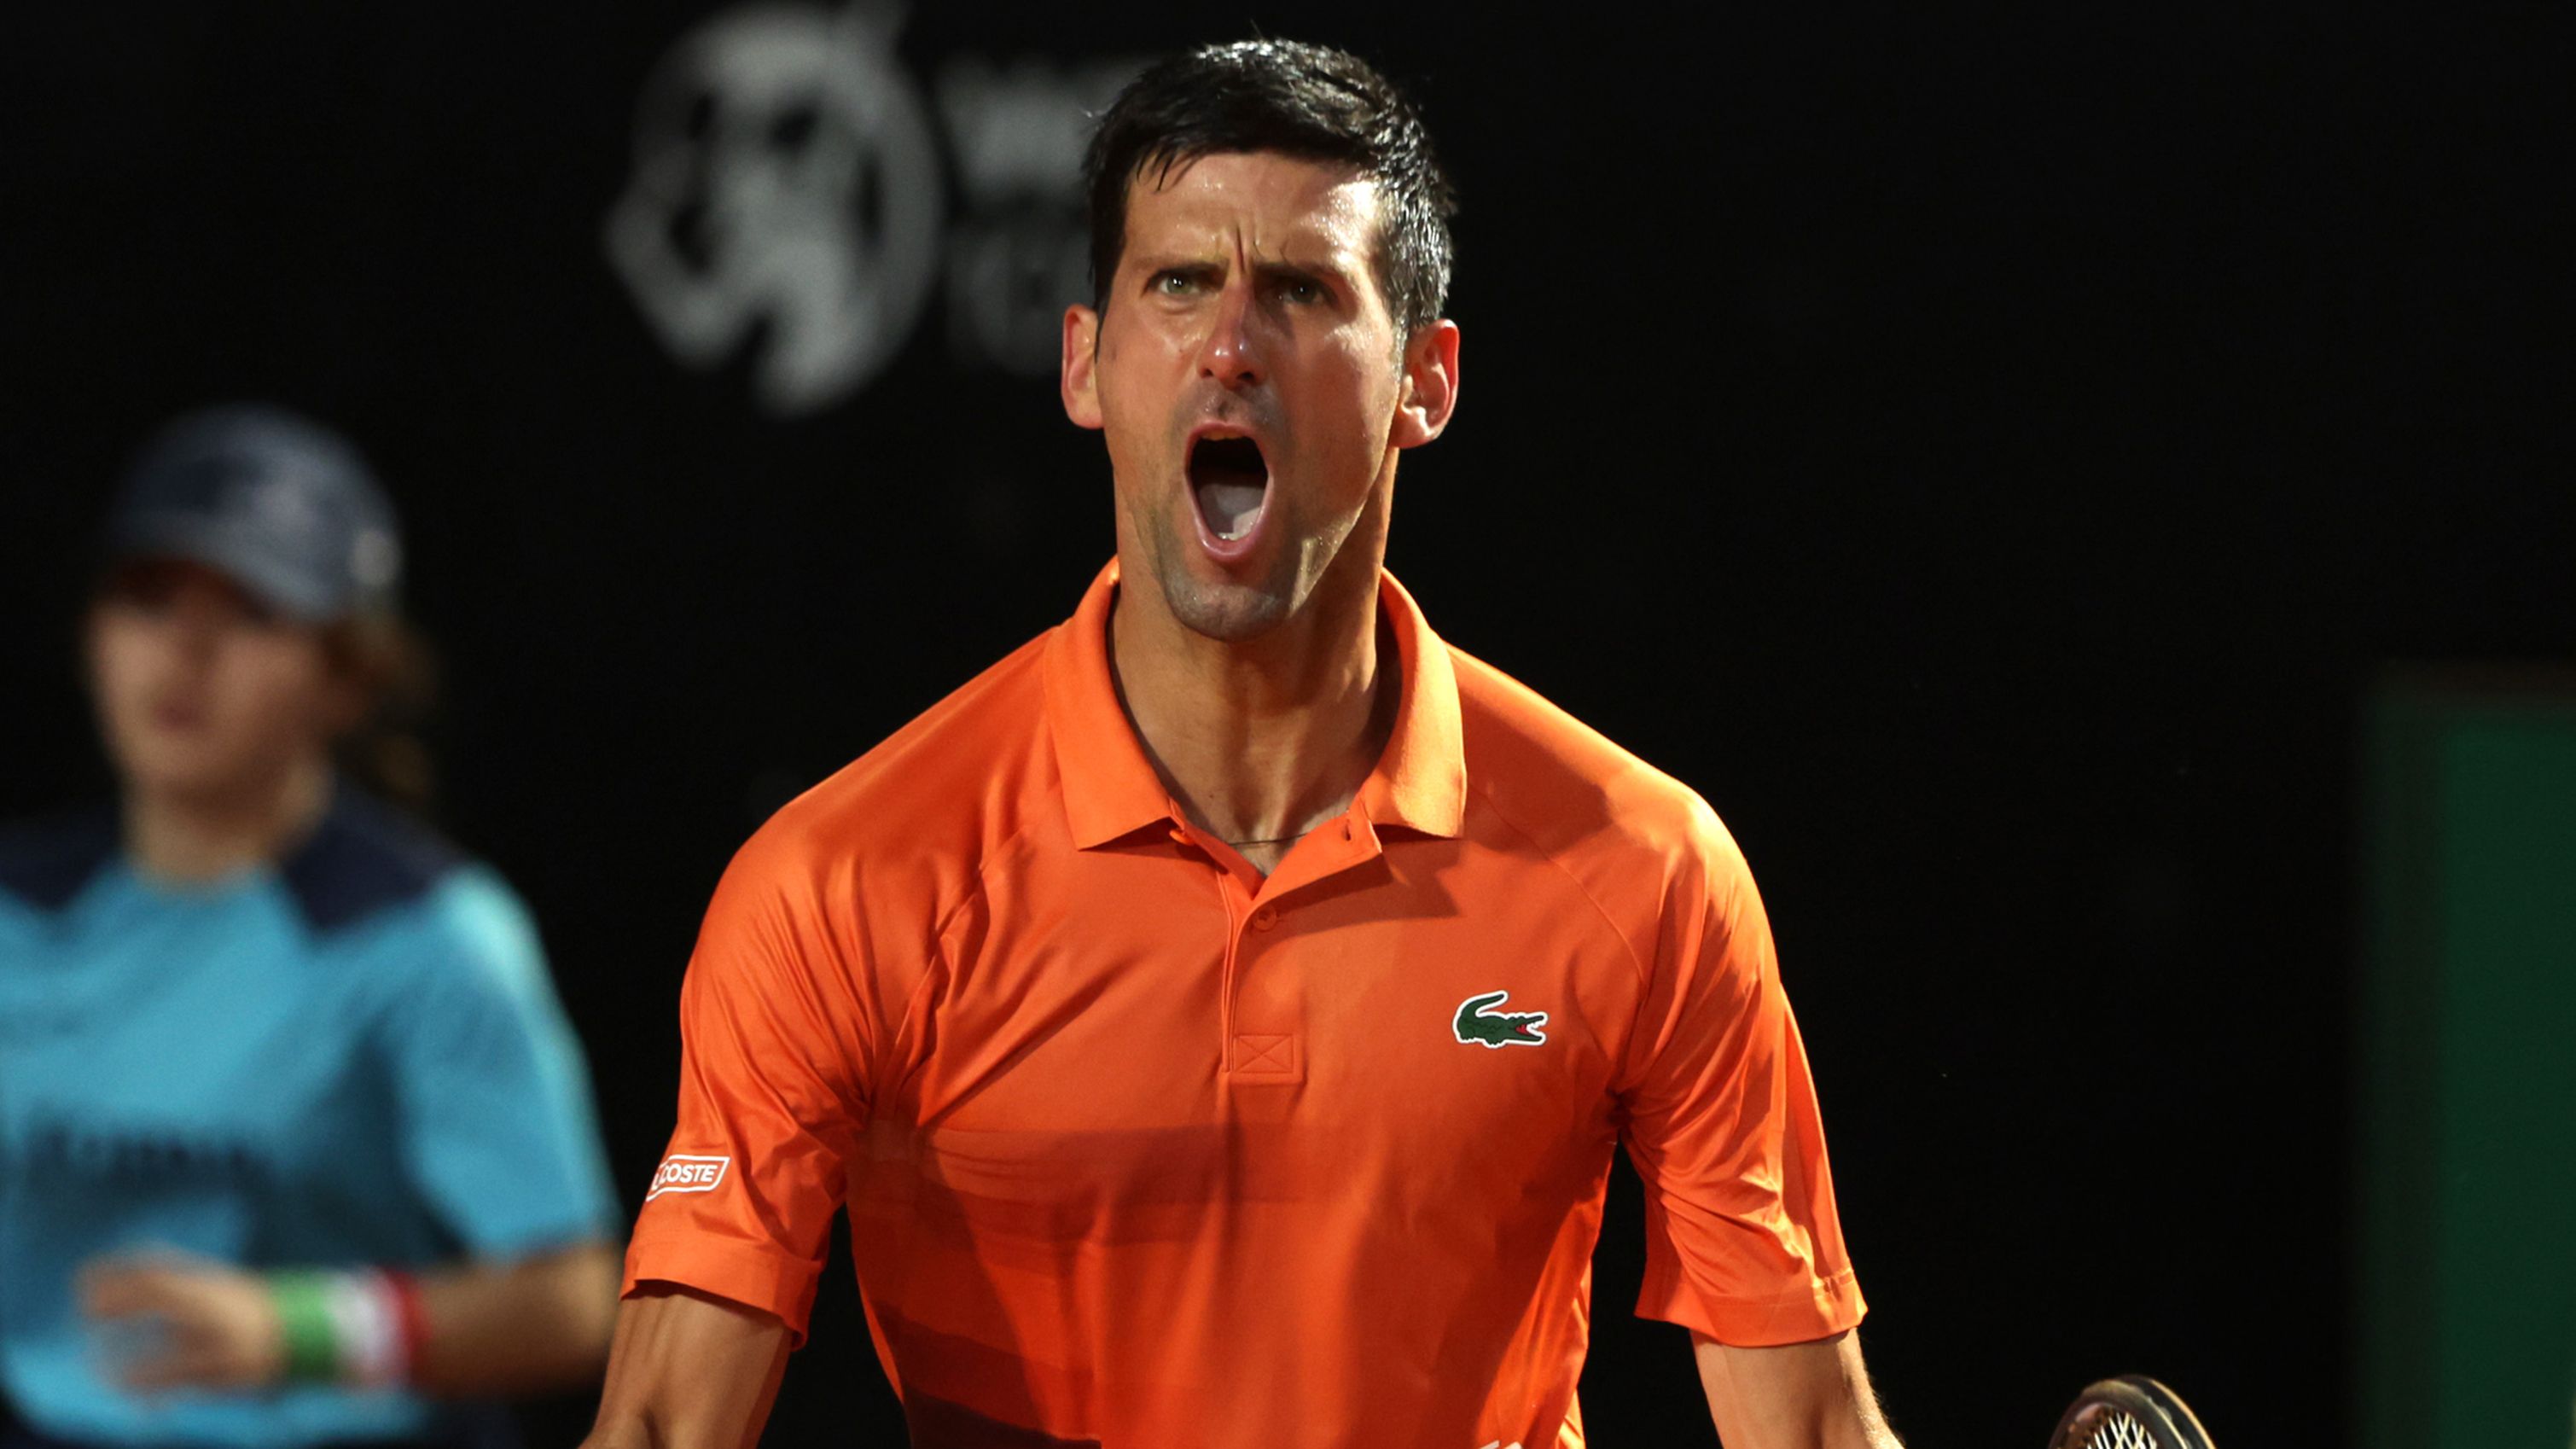 Novak Djokovic reaches his biggest final of 2022, set to take on Tsitsipas in Italian Open